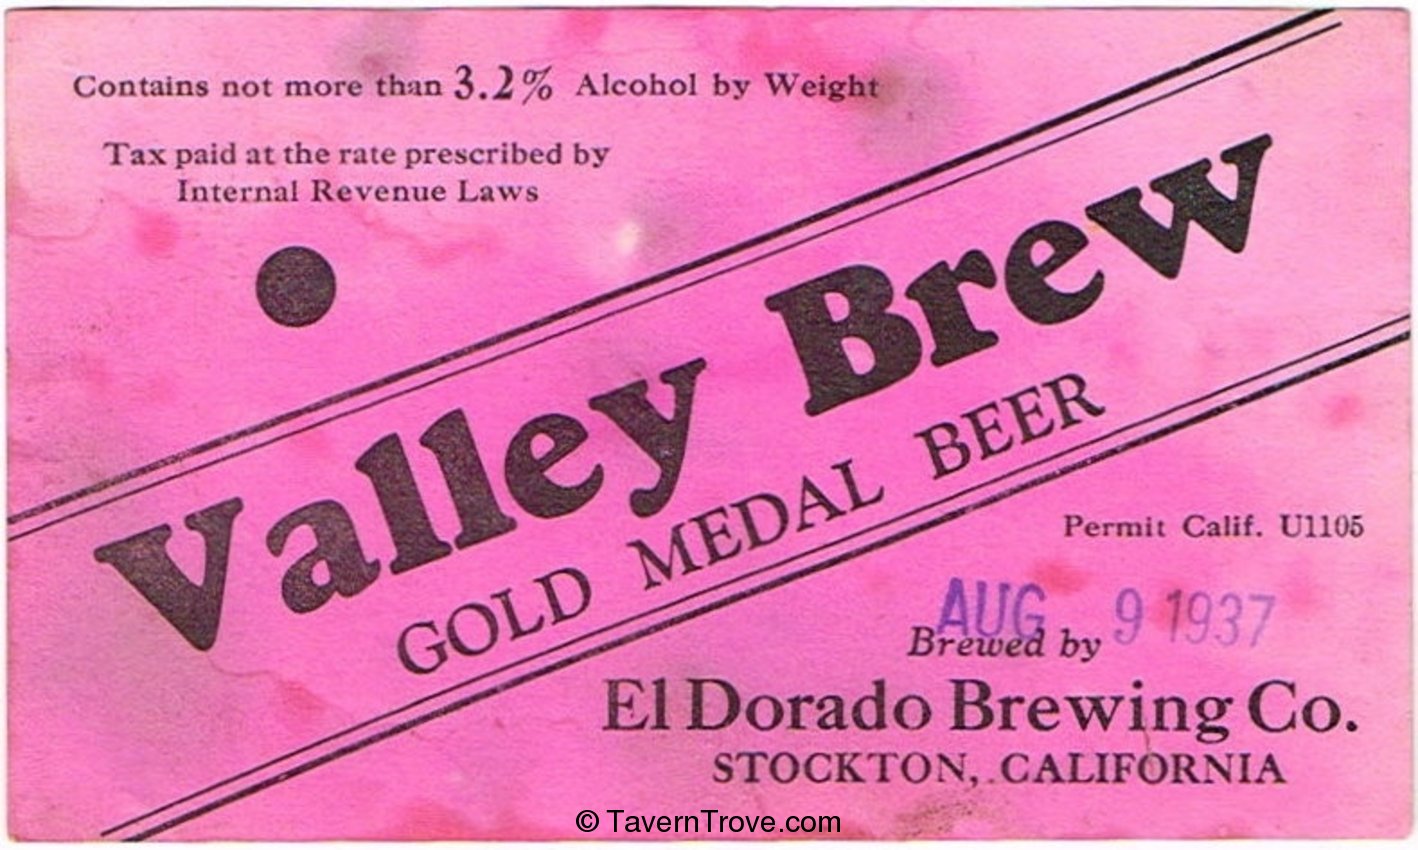 Valley Brew Gold Medal Beer